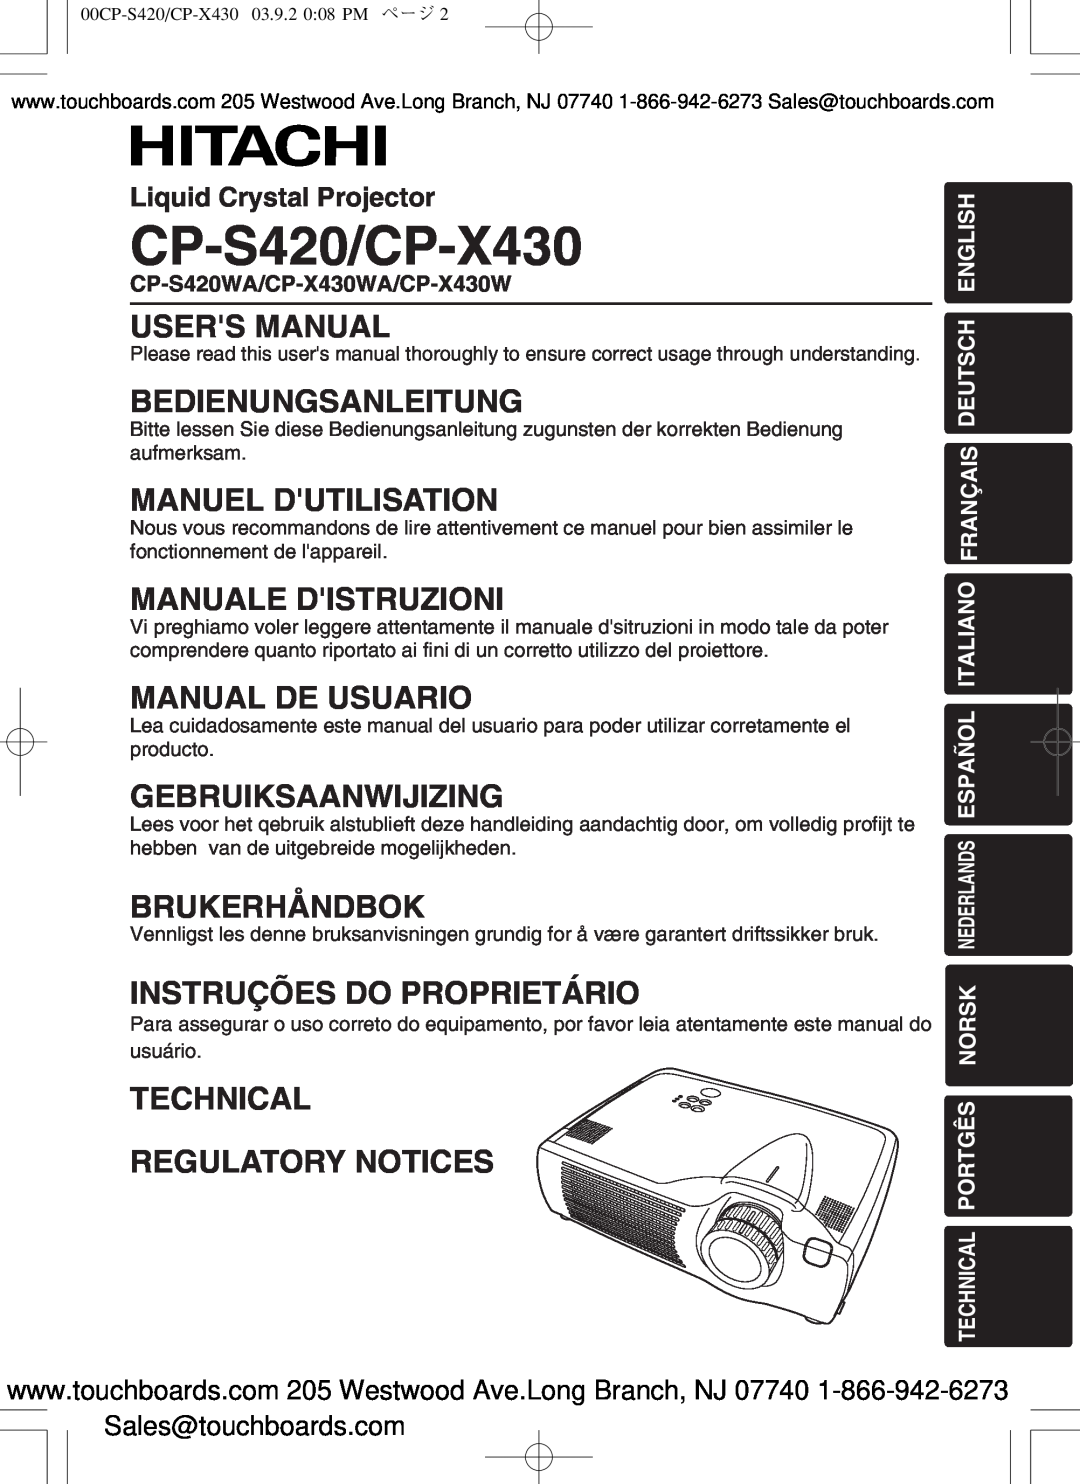 Hitachi CP-X430W, CP-S420WA user manual Bedienungsanleitung, Manuel Dutilisation, Manuale Distruzioni, Manual De Usuario 